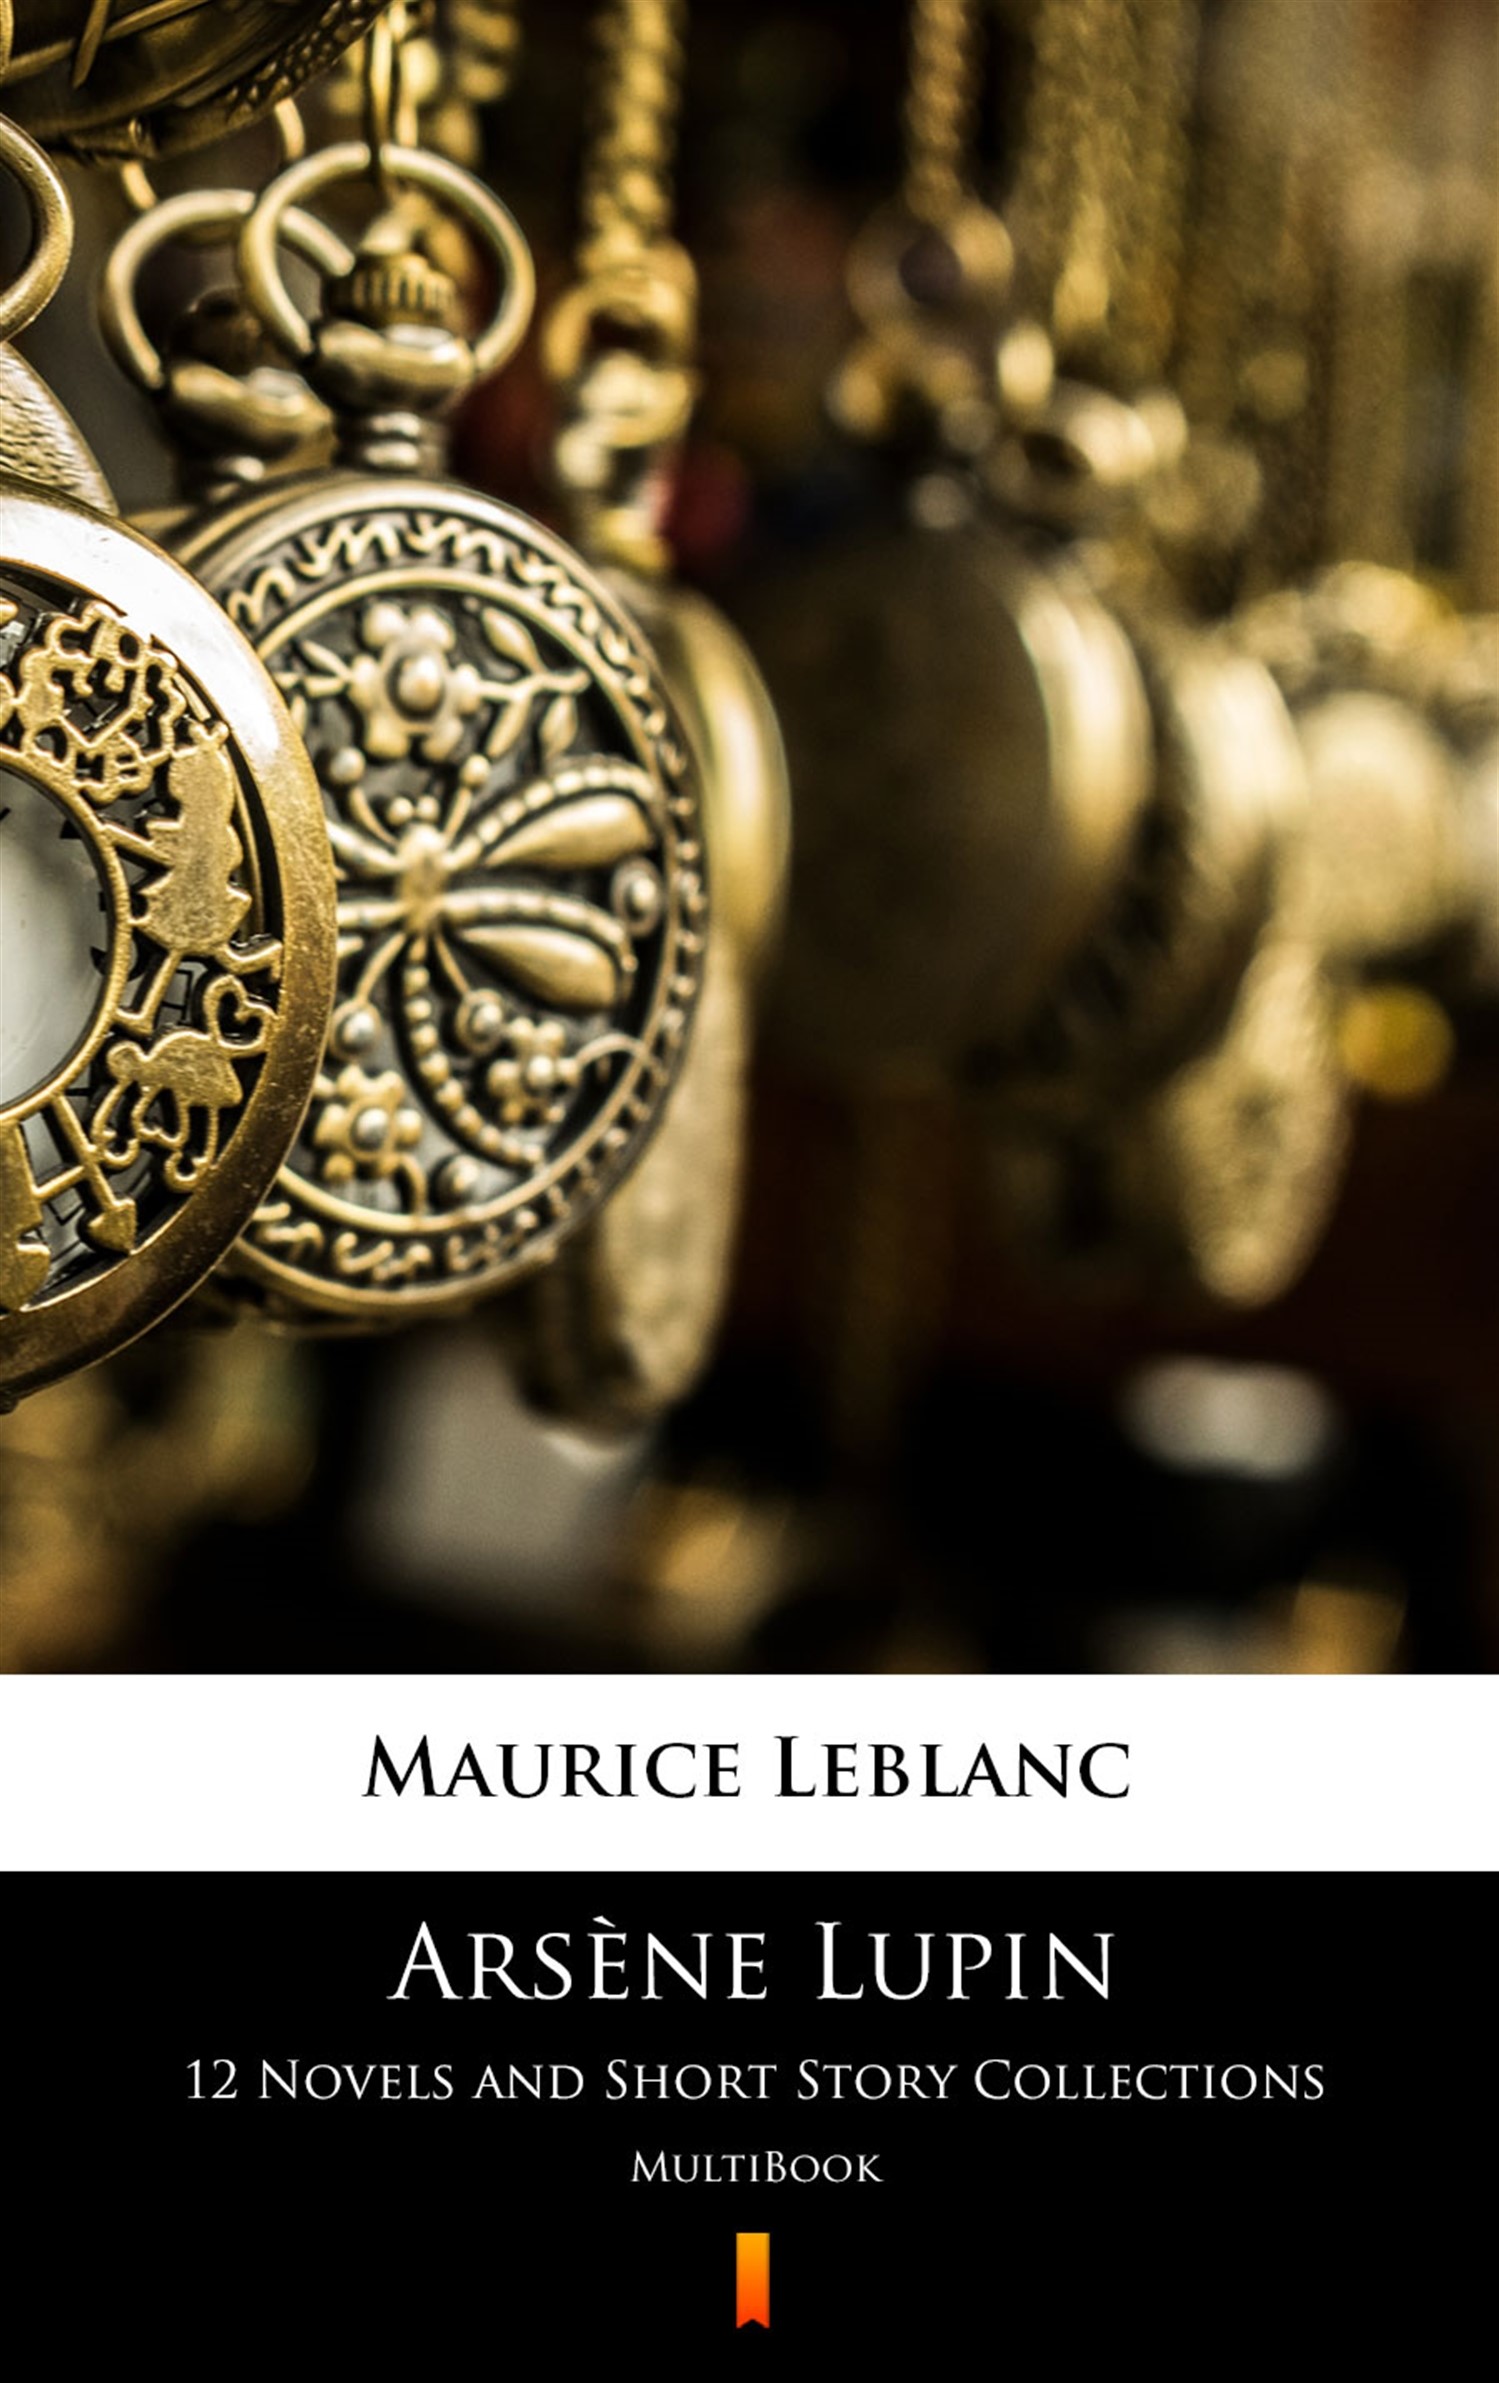 Okładka:Arsène Lupin. 12 Novels and Short Story Collections. MultiBook 